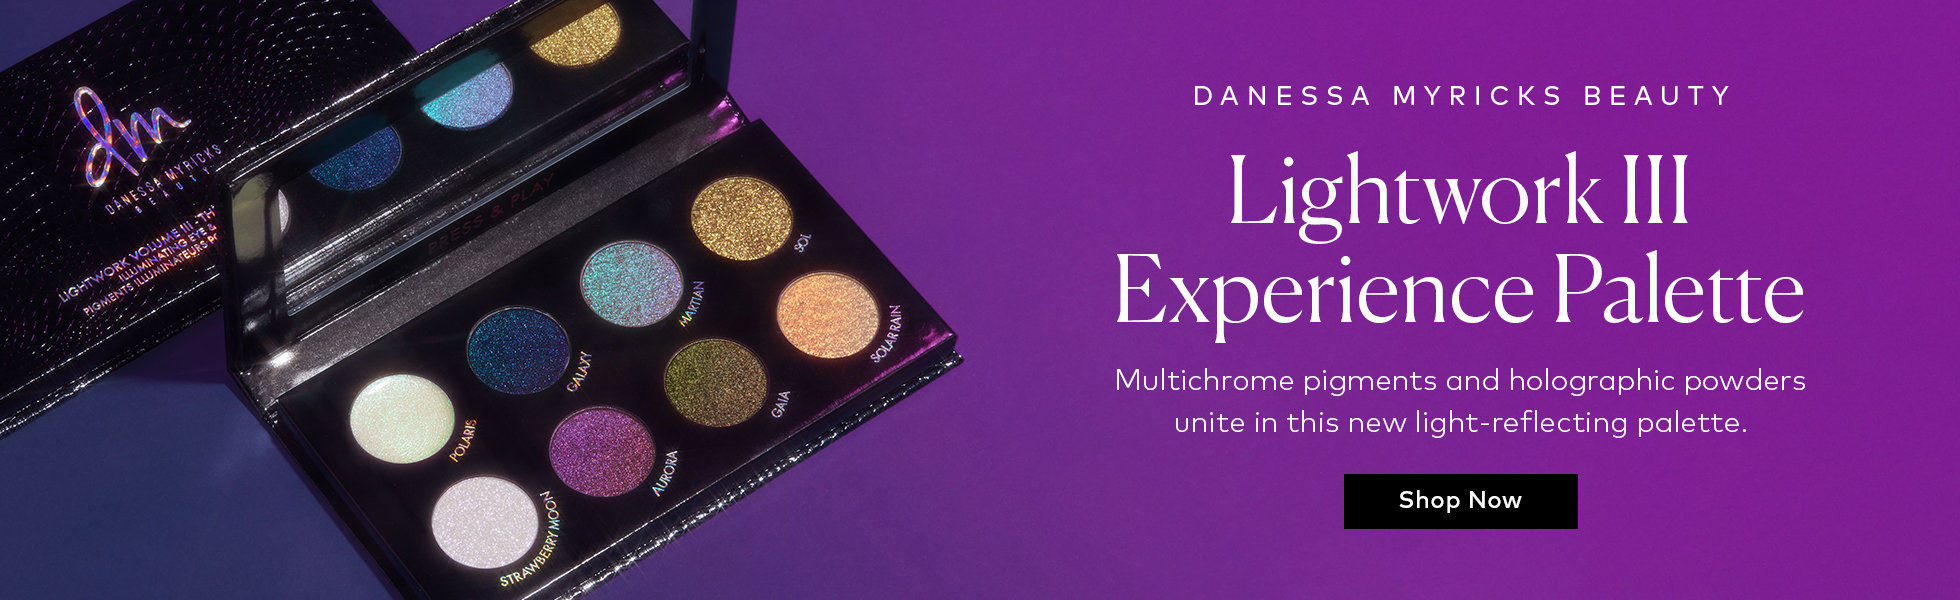 Shop the new Danessa Myricks Beauty Lightwork III Experience Palette now on Beautylish.cocm